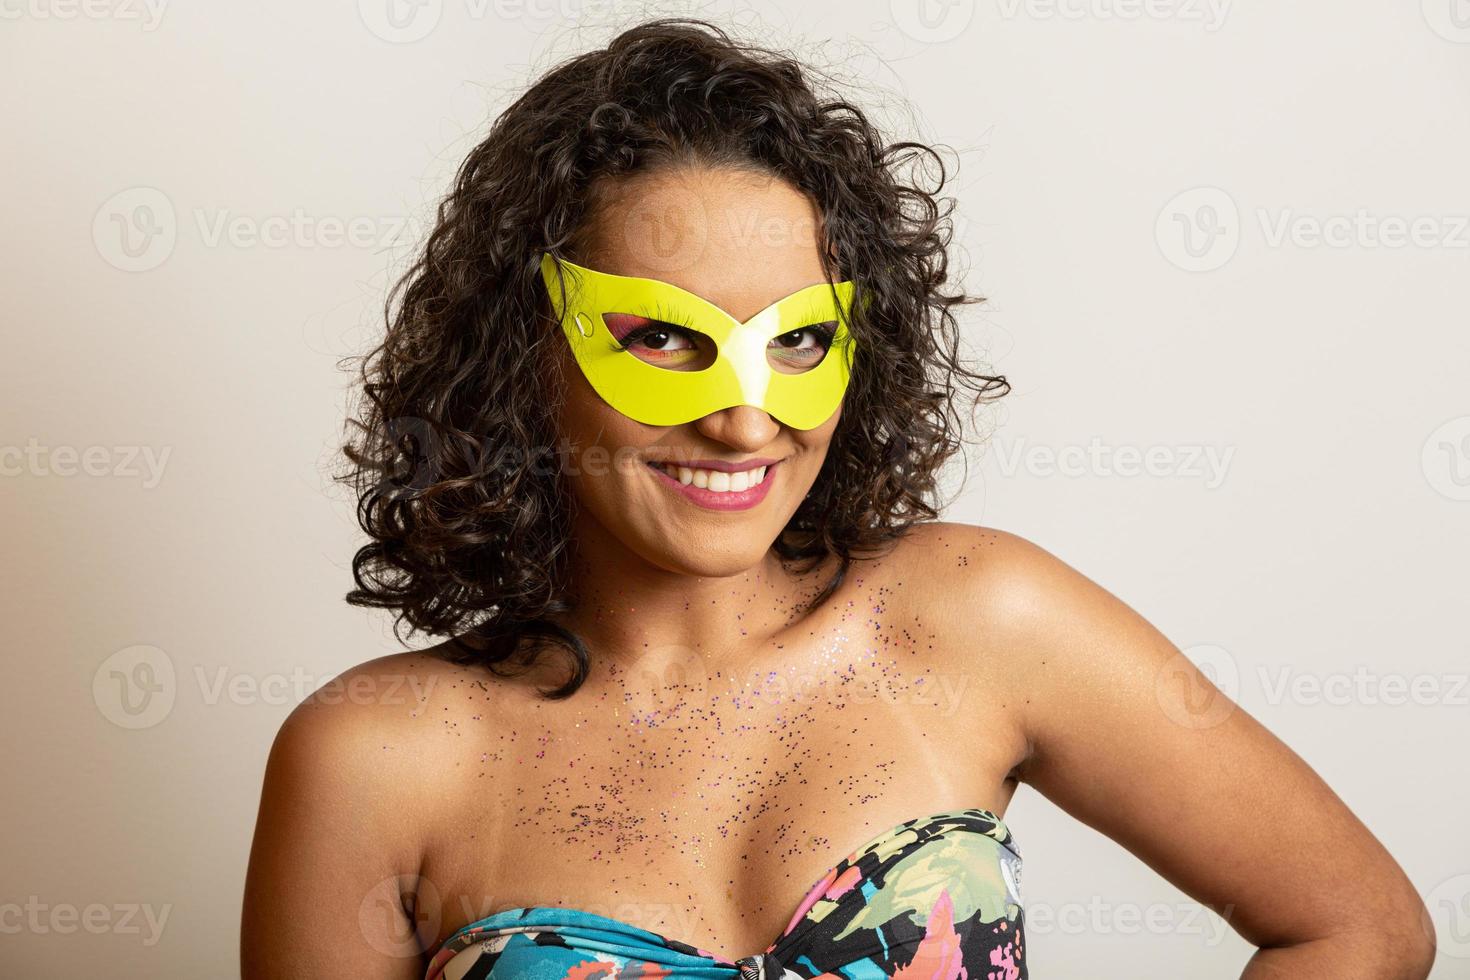 brasiliansk karneval. ung kvinna i kostym njuter av karnevalsfesten. foto